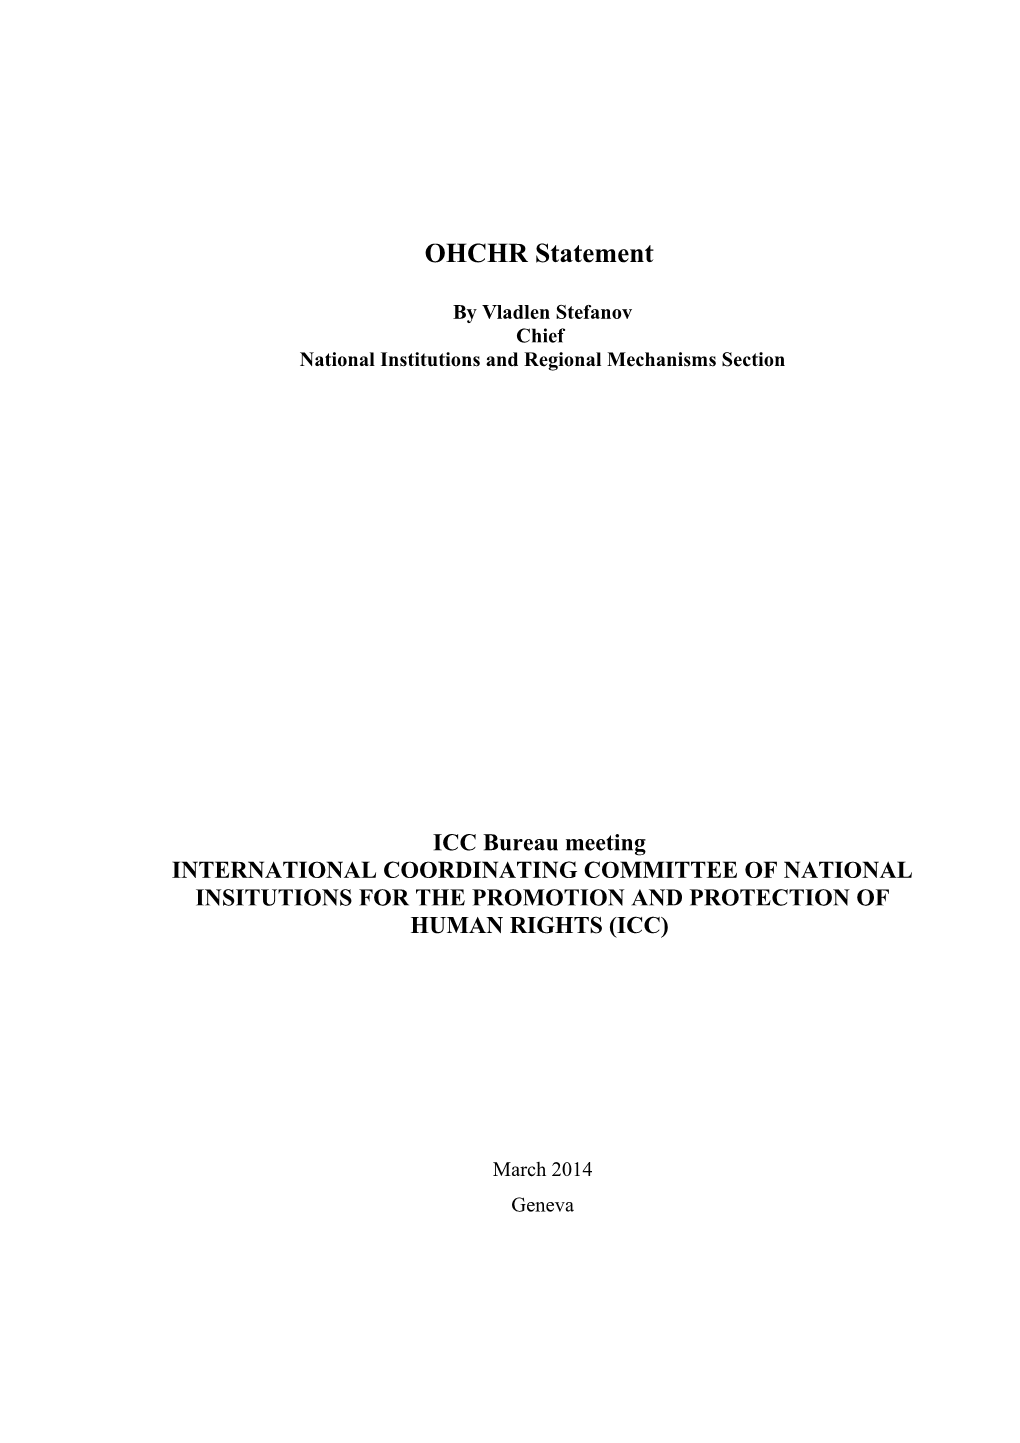 OHCHR Statement by Vladlen Stefanov Chief, National Institutions and Regional Mechanisms Section